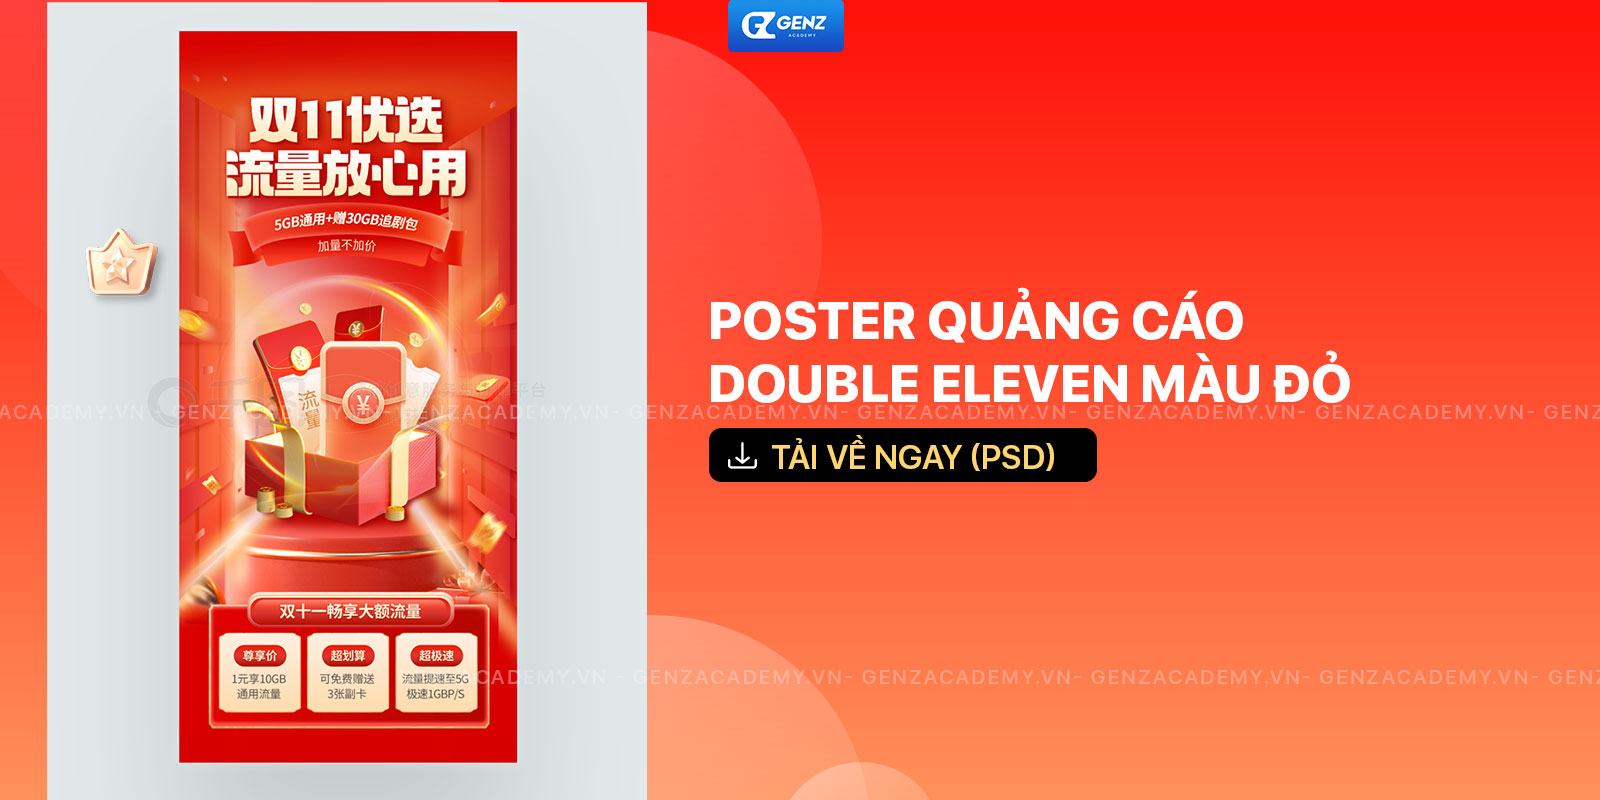 Poster quảng cáo Double Eleven màu đỏ - GenZ Academy-GenZ Academy